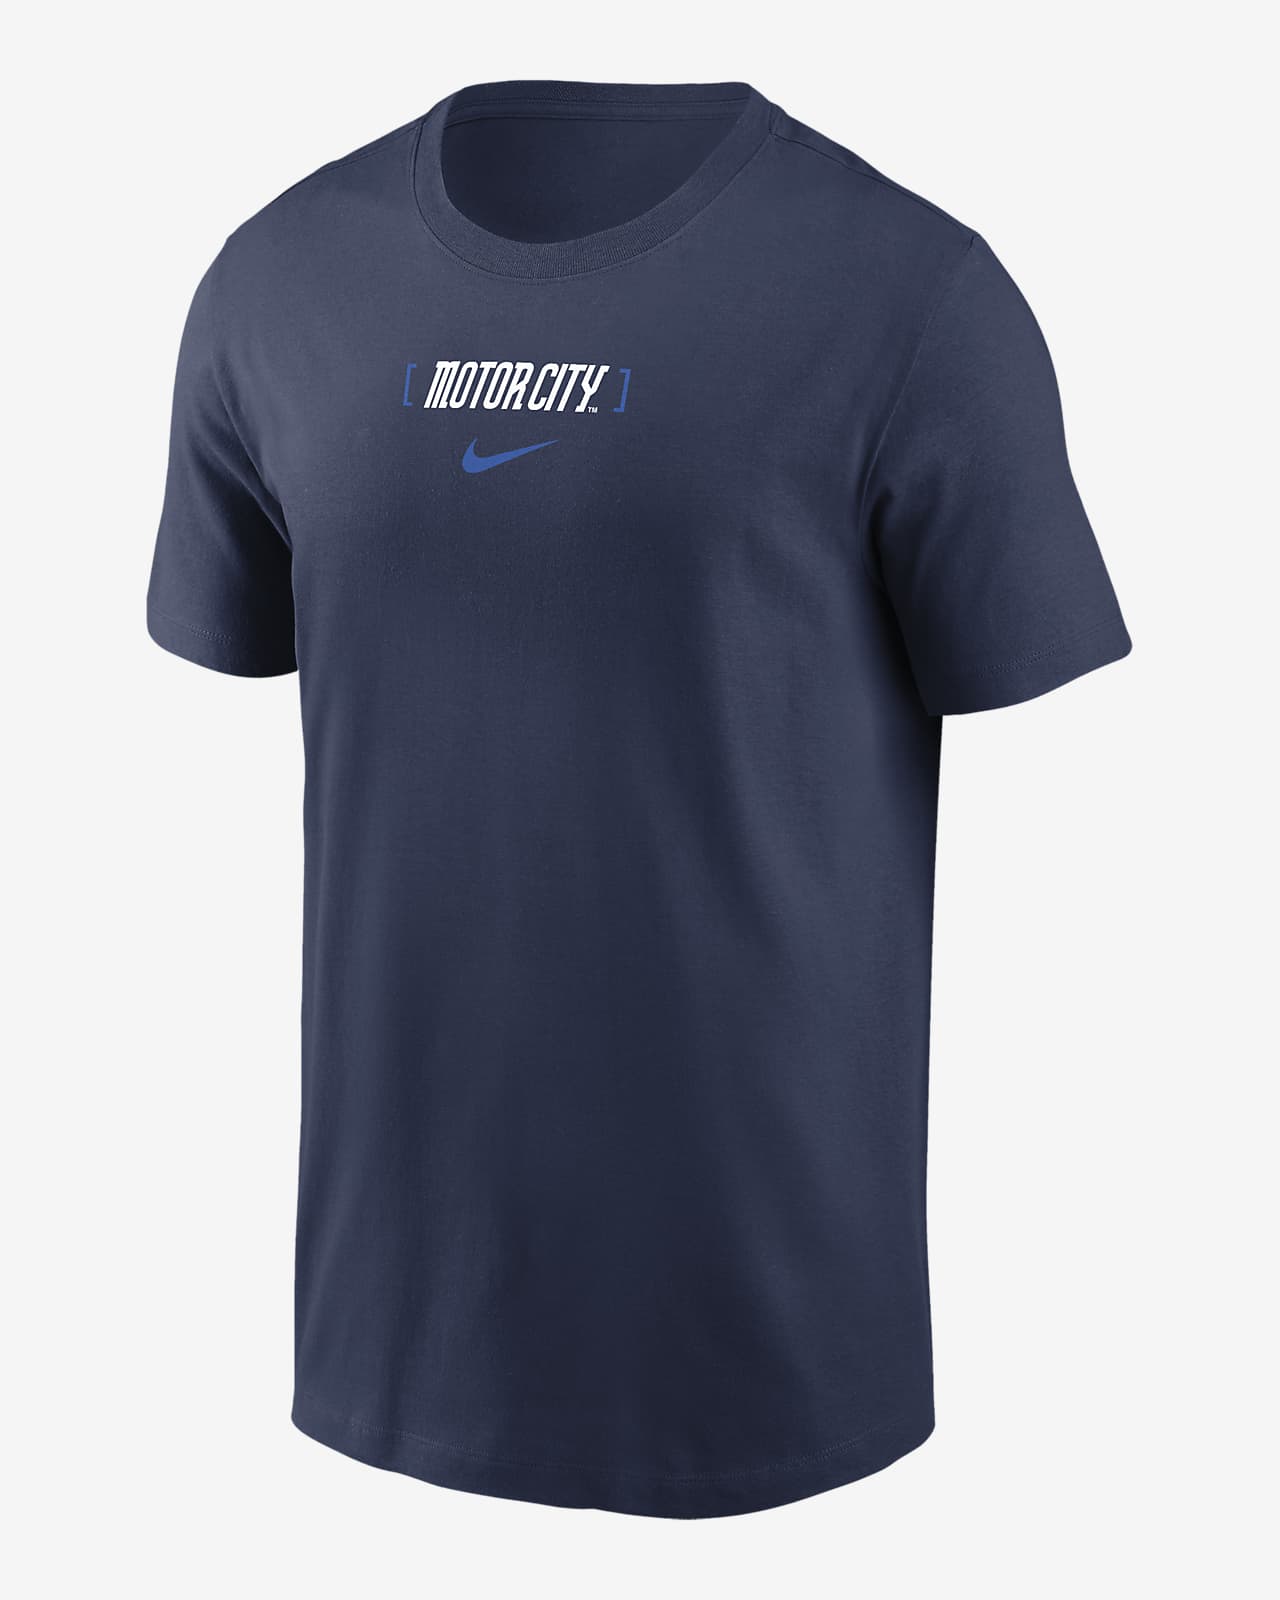 Detroit Tigers City Connect Men's Nike MLB T-Shirt